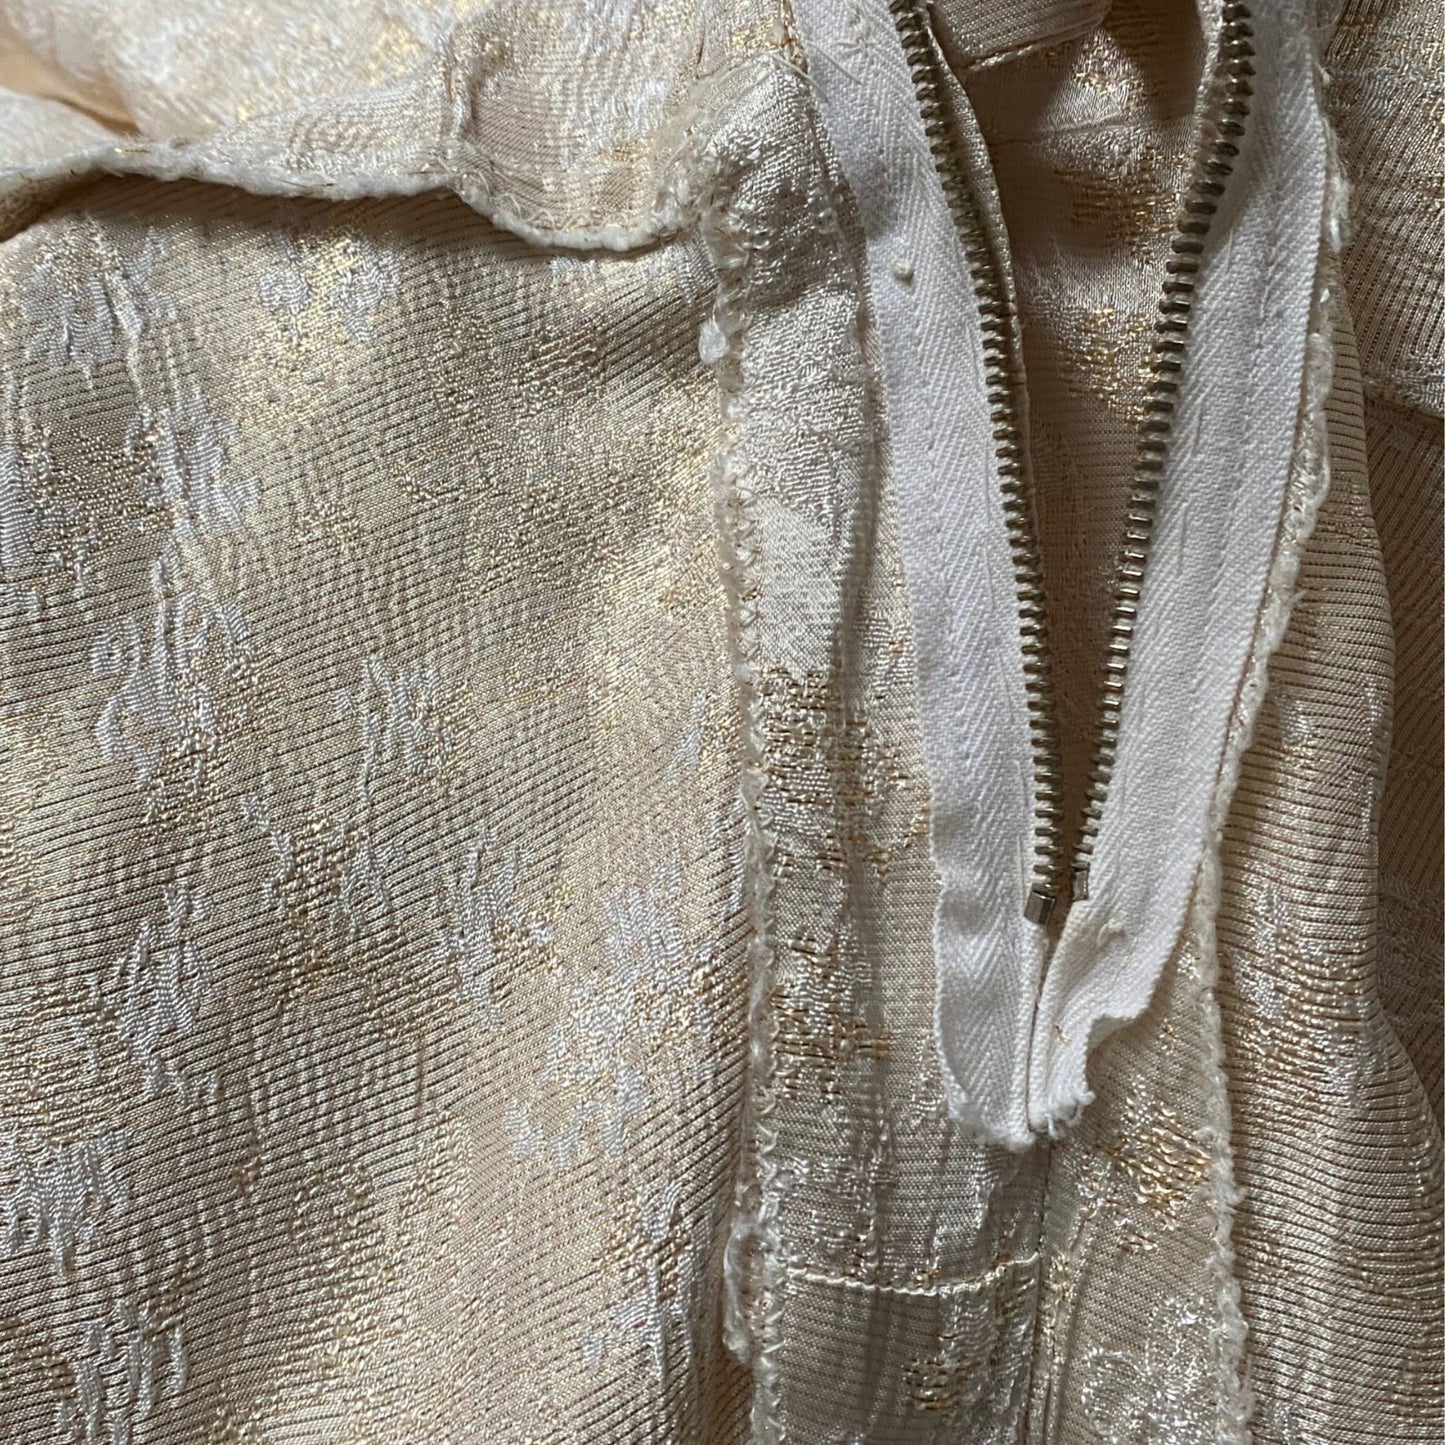 Elegant Cream and Pale Gold Floral Brocade 50s Vintage Dress. Approx UK size 10- 12